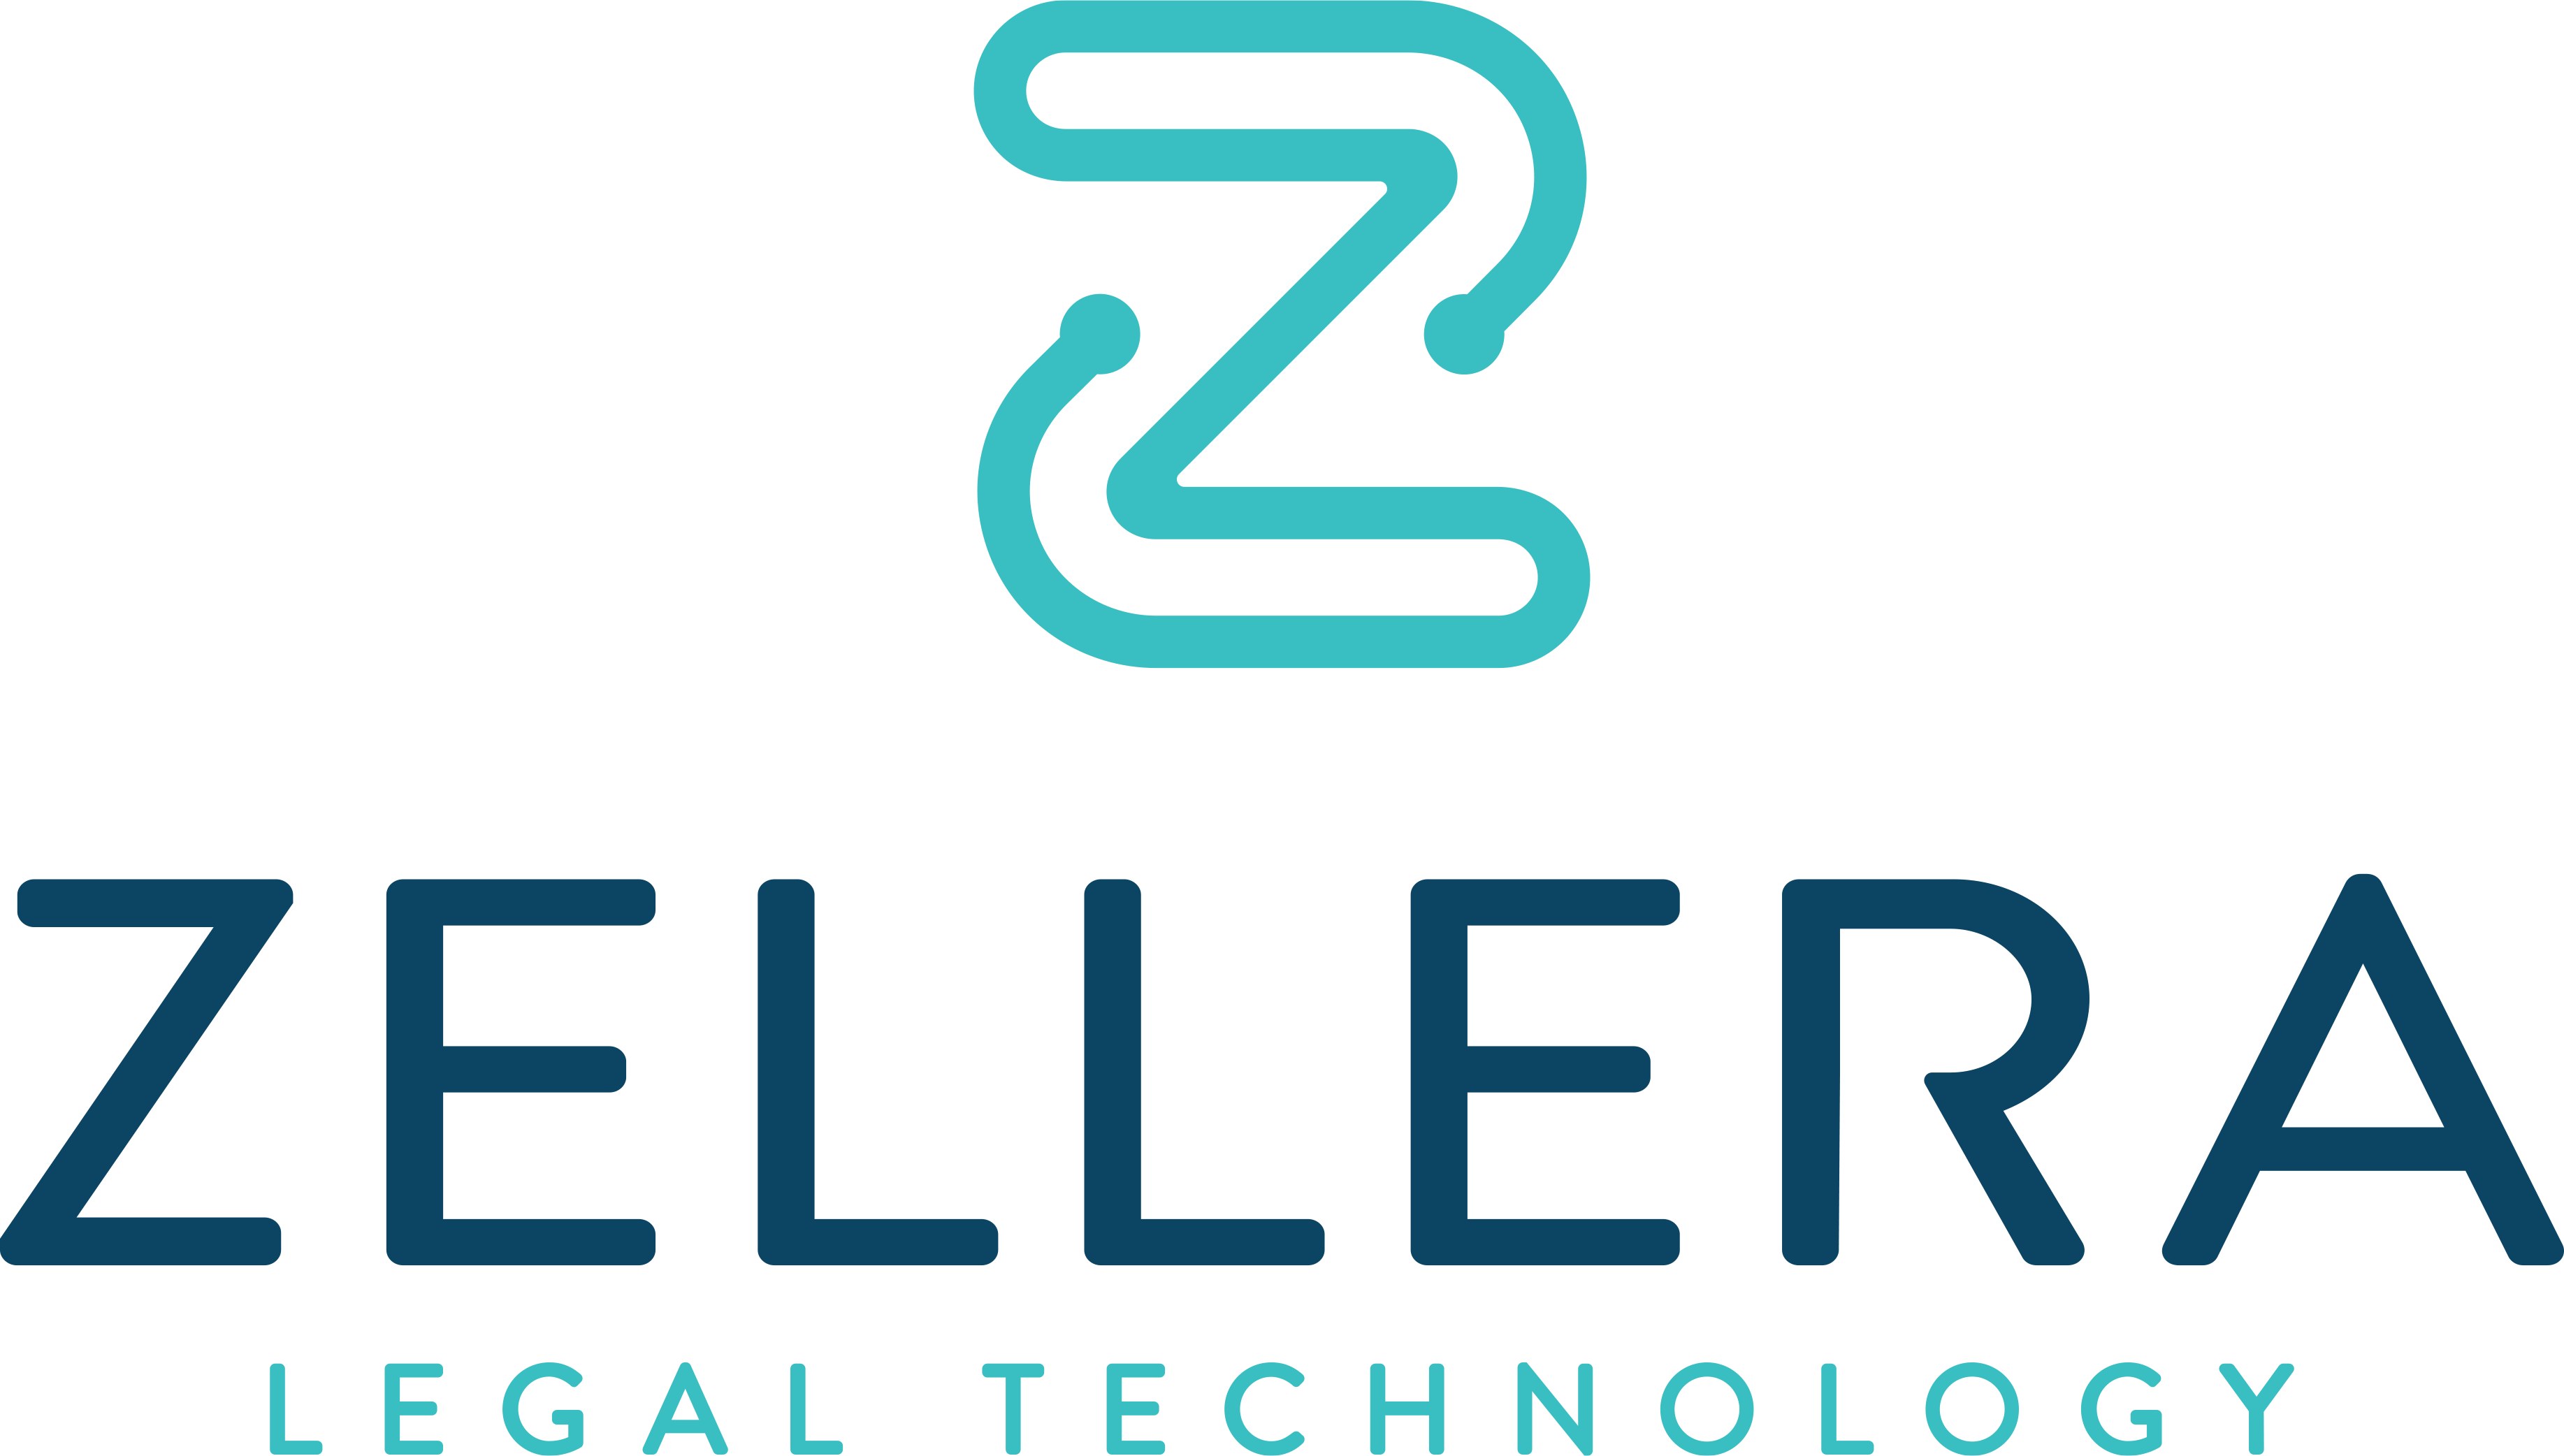 Zellera Legal Technology